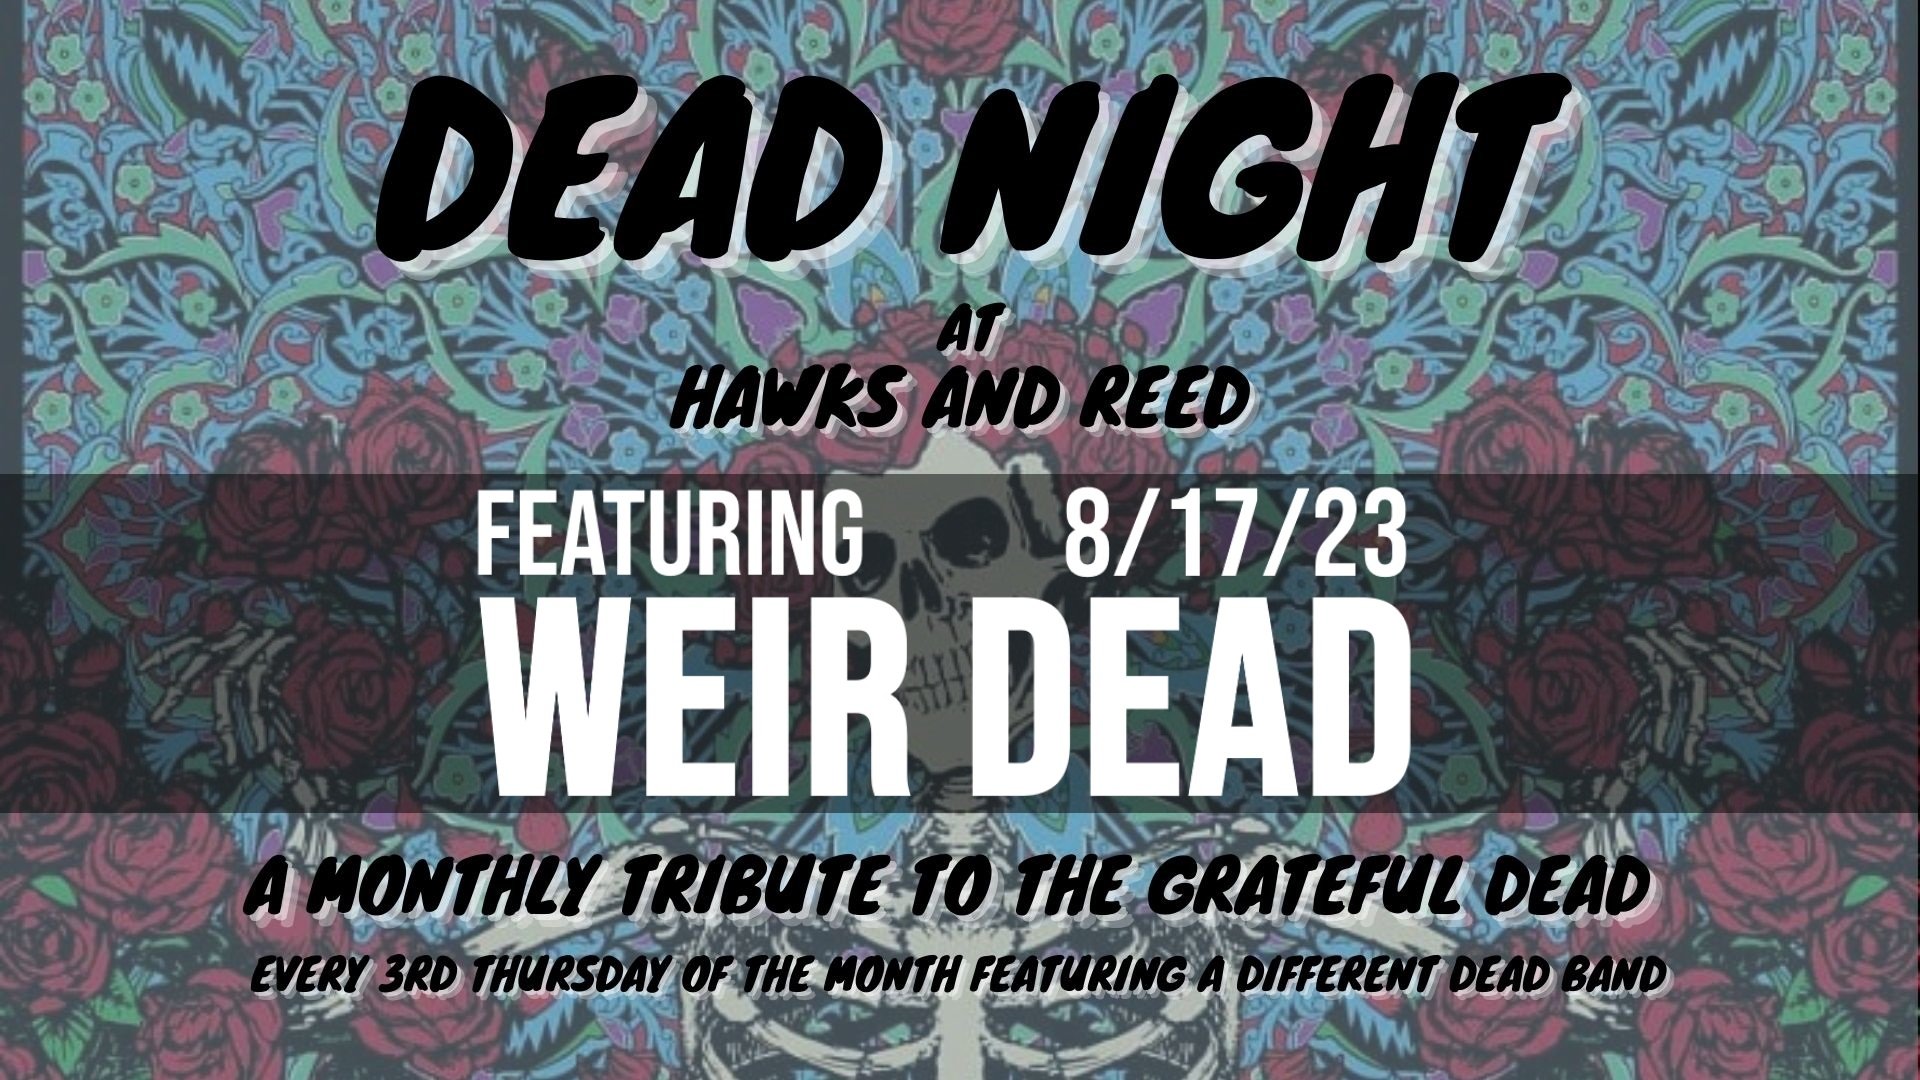 Grateful Dead Night with Weir Dead